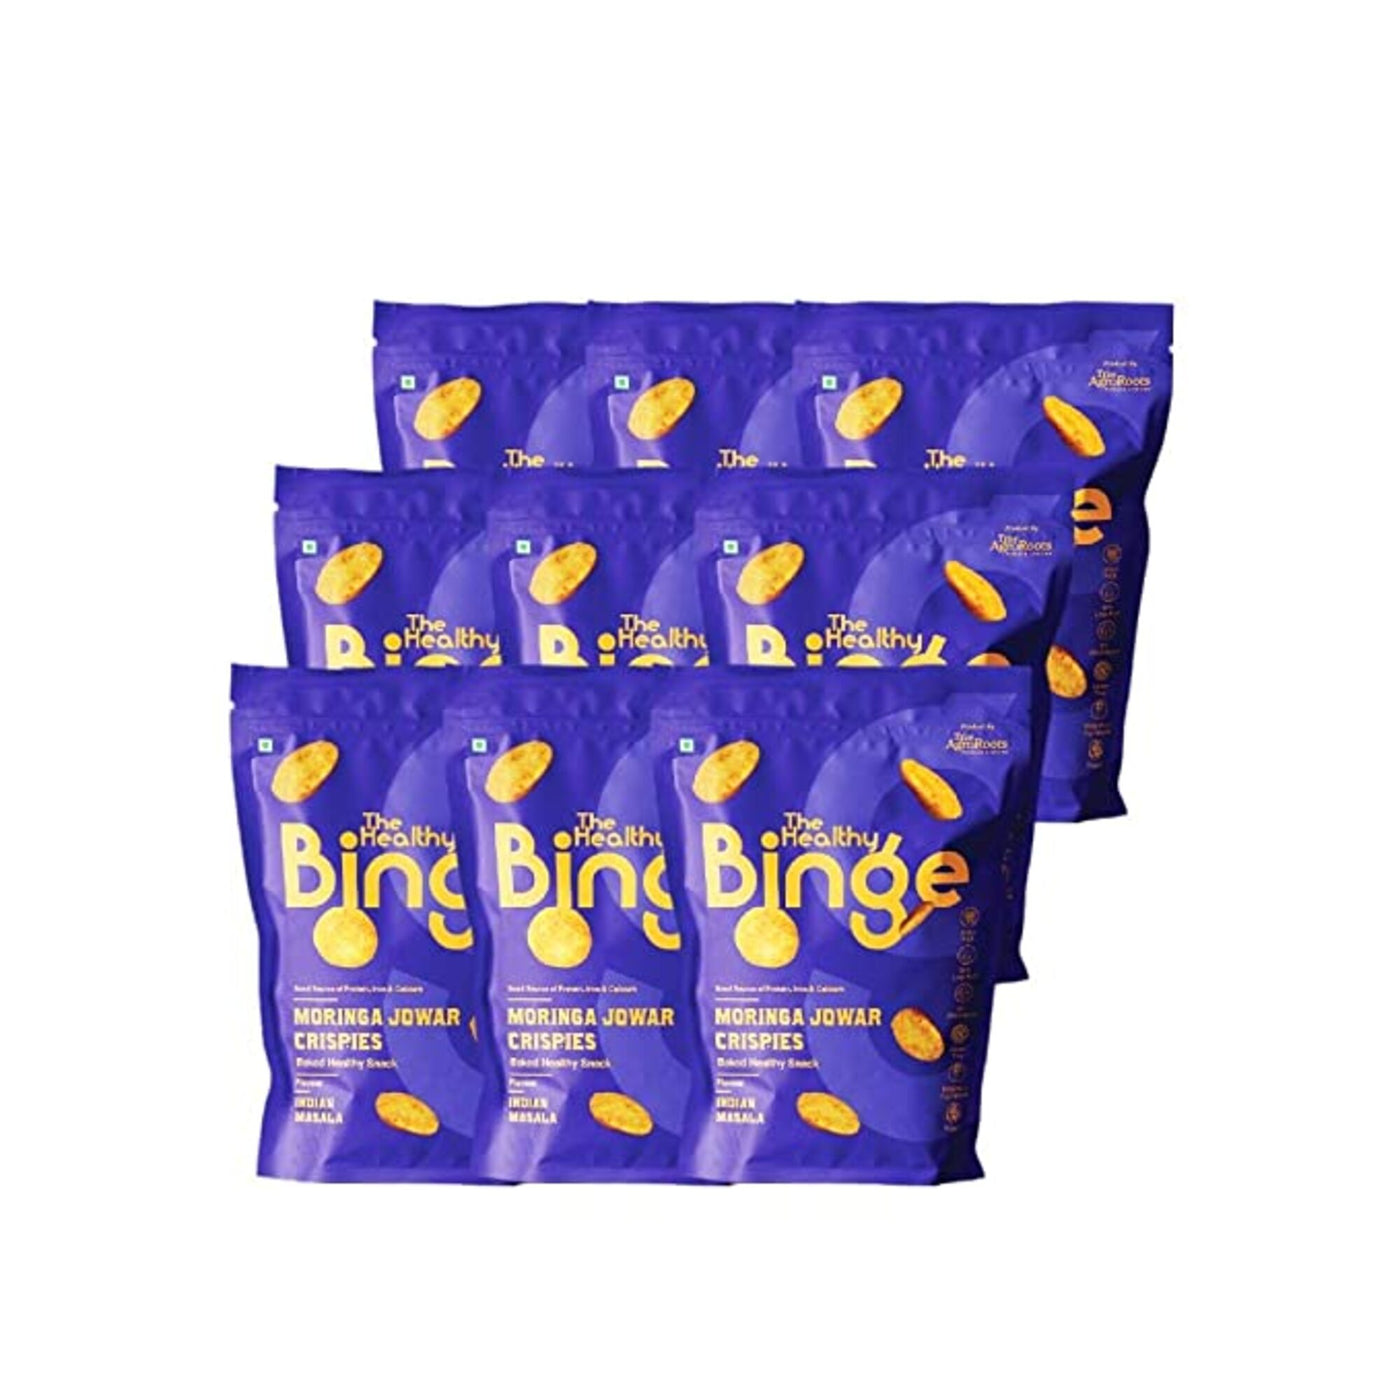 The Healthy Binge Moringa Jowar crispies - Pack of 9